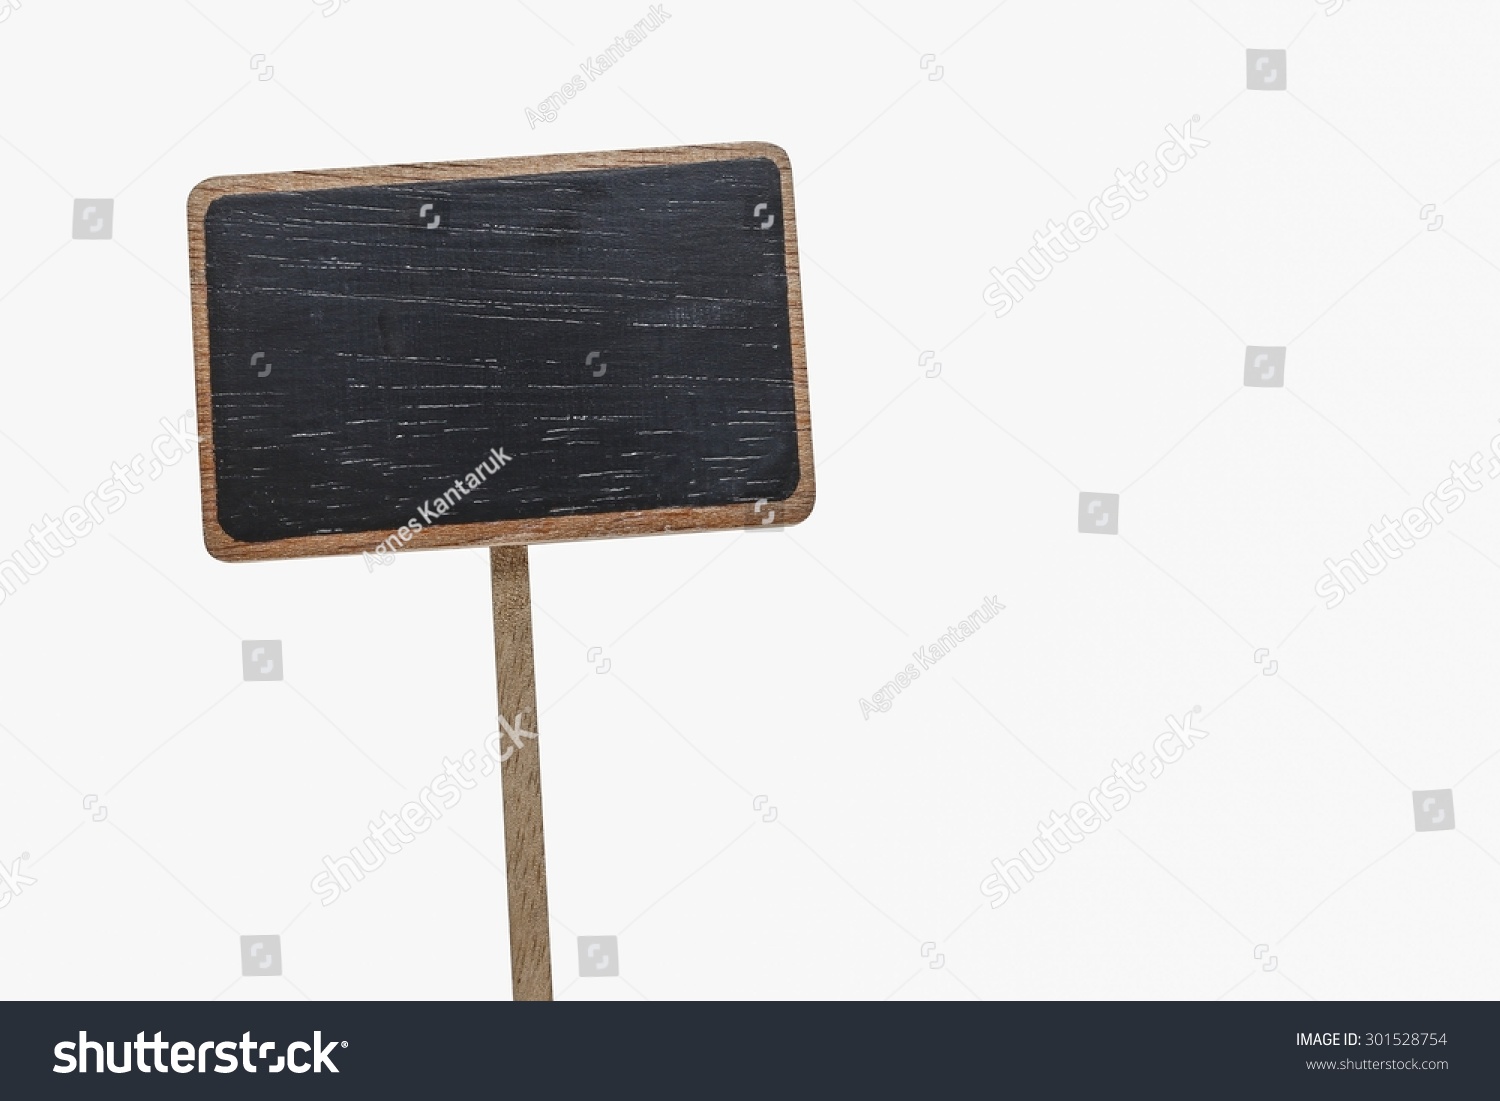 9,389 Chalk board sale sign Images, Stock Photos & Vectors | Shutterstock